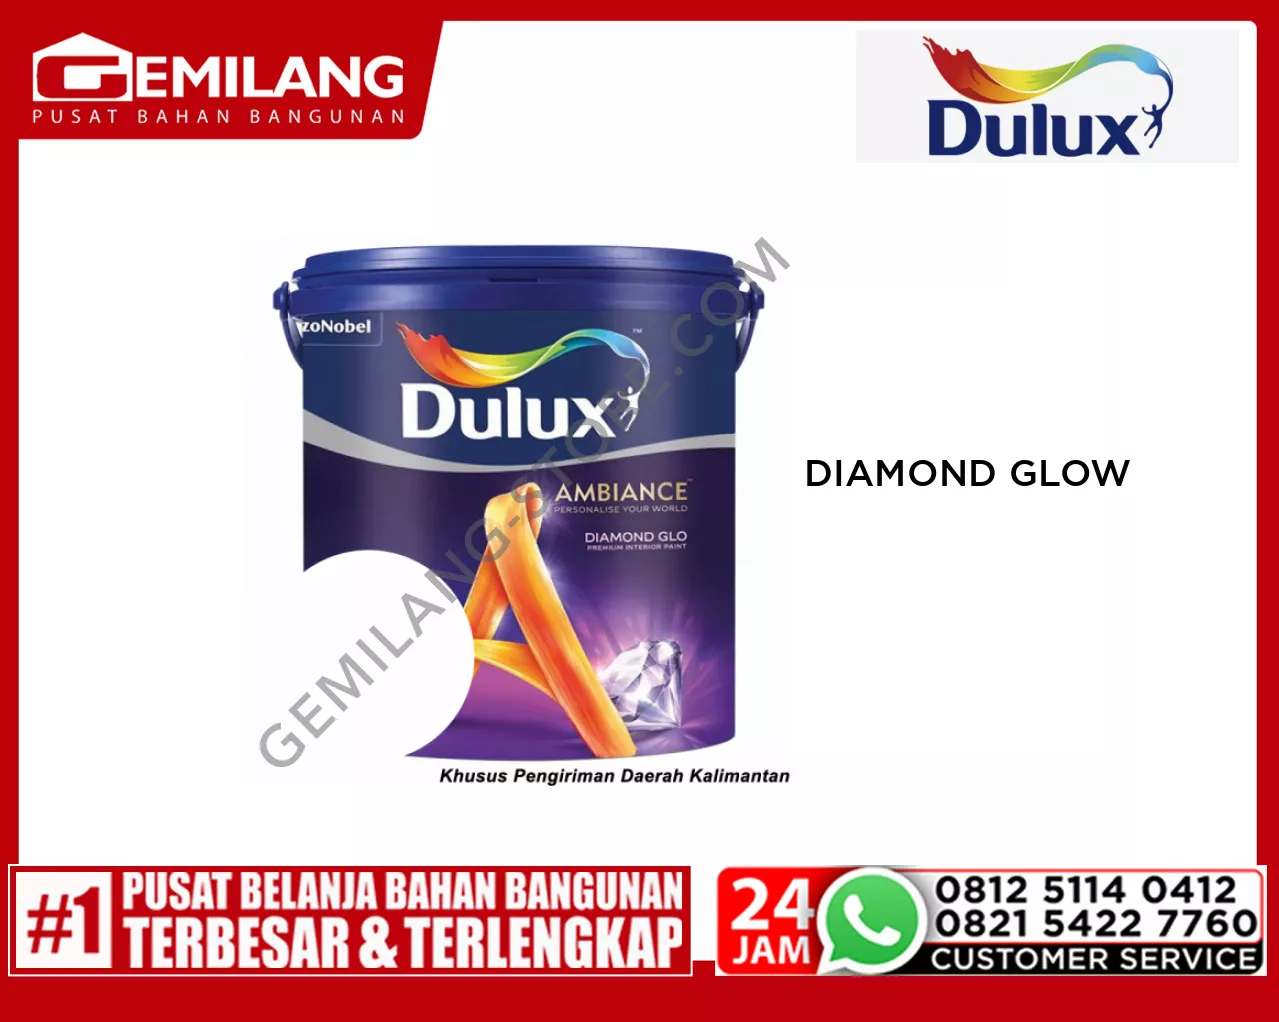 DULUX AMBIANCE DIAMOND GLOW BRILLIANT WHITE 2290 2.5ltr